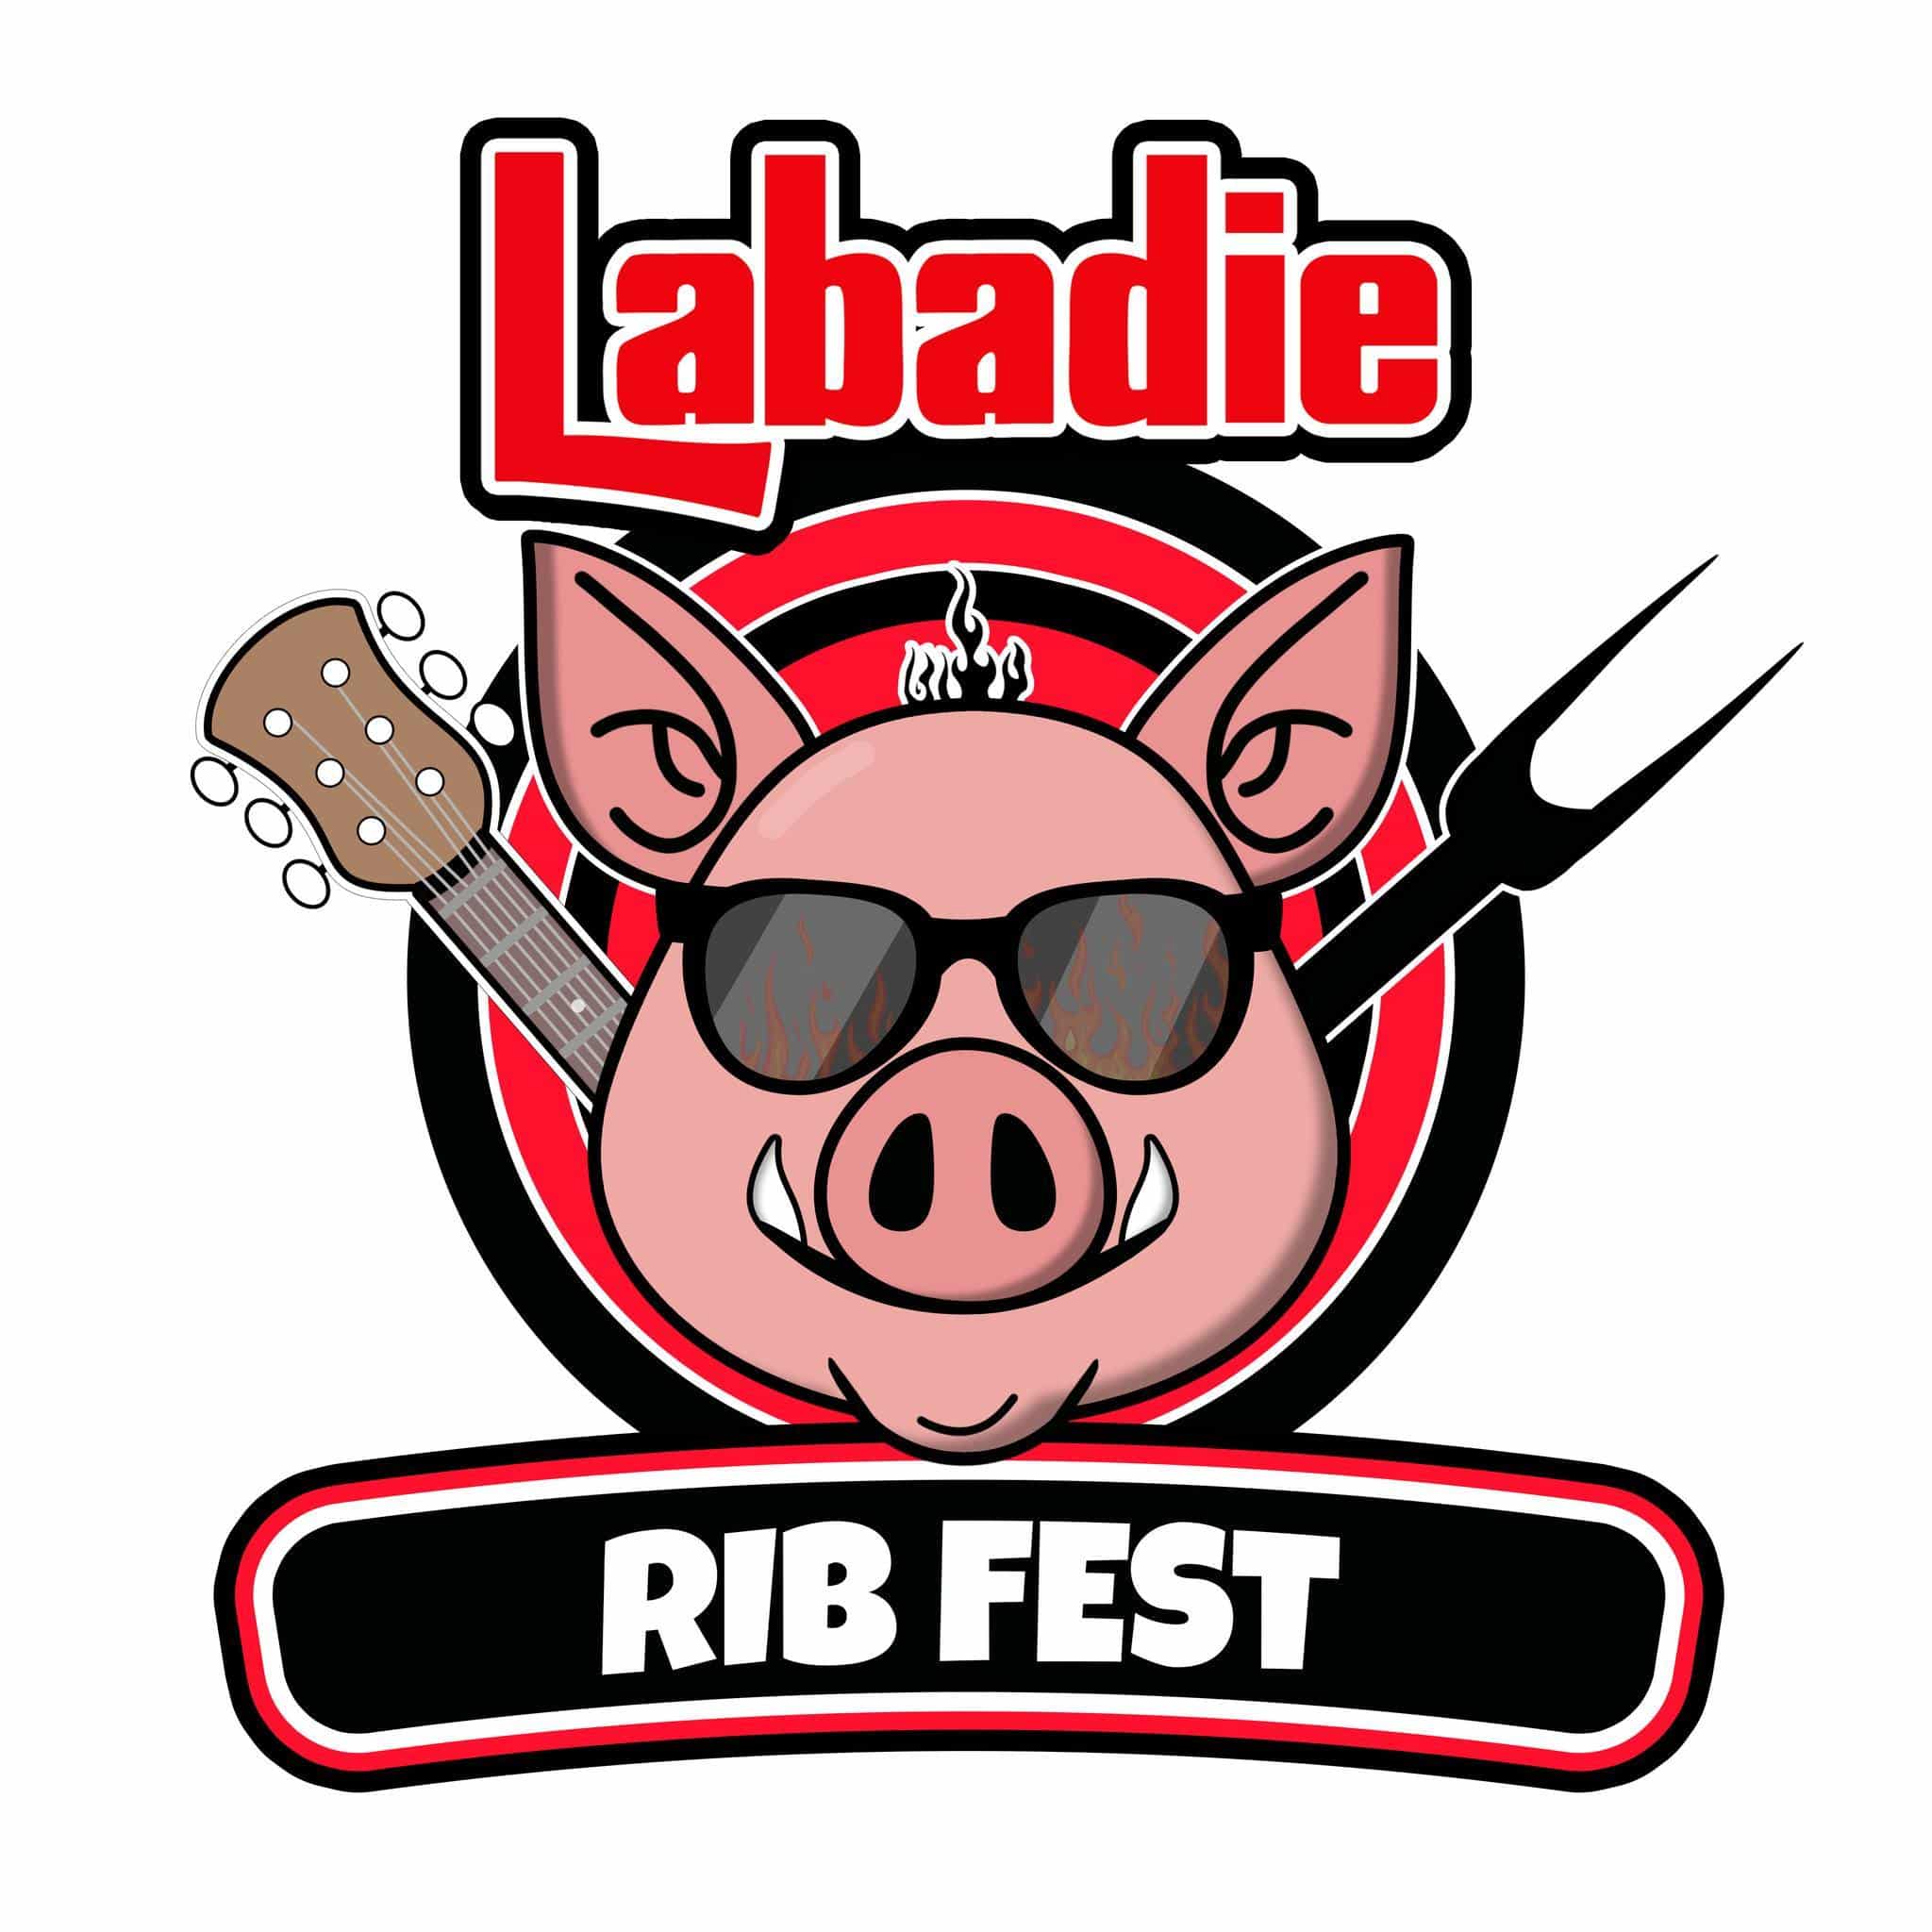 Labadie Rib Fest